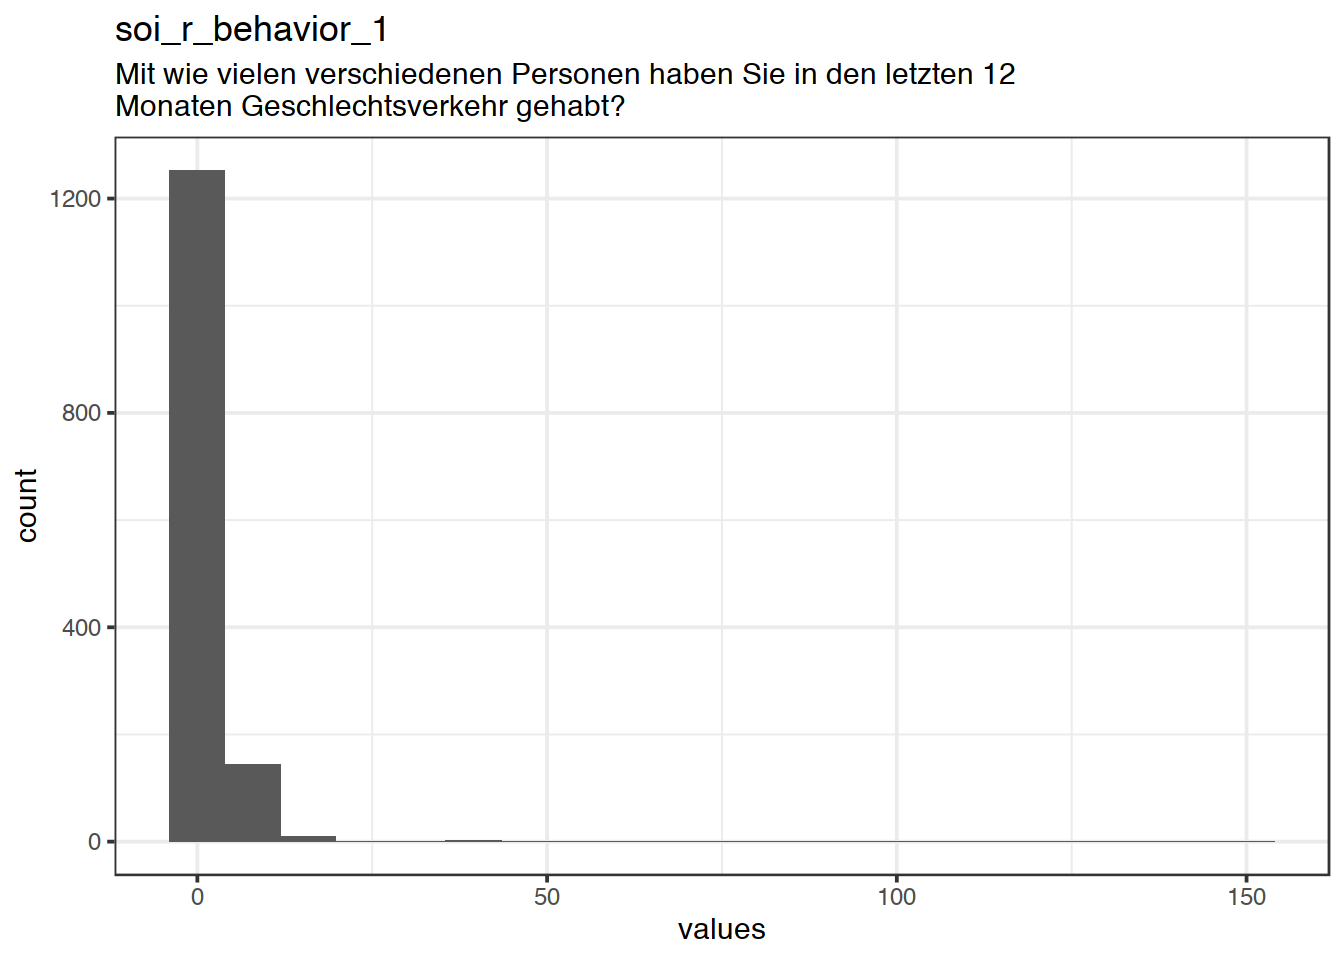 Distribution of values for soi_r_behavior_1